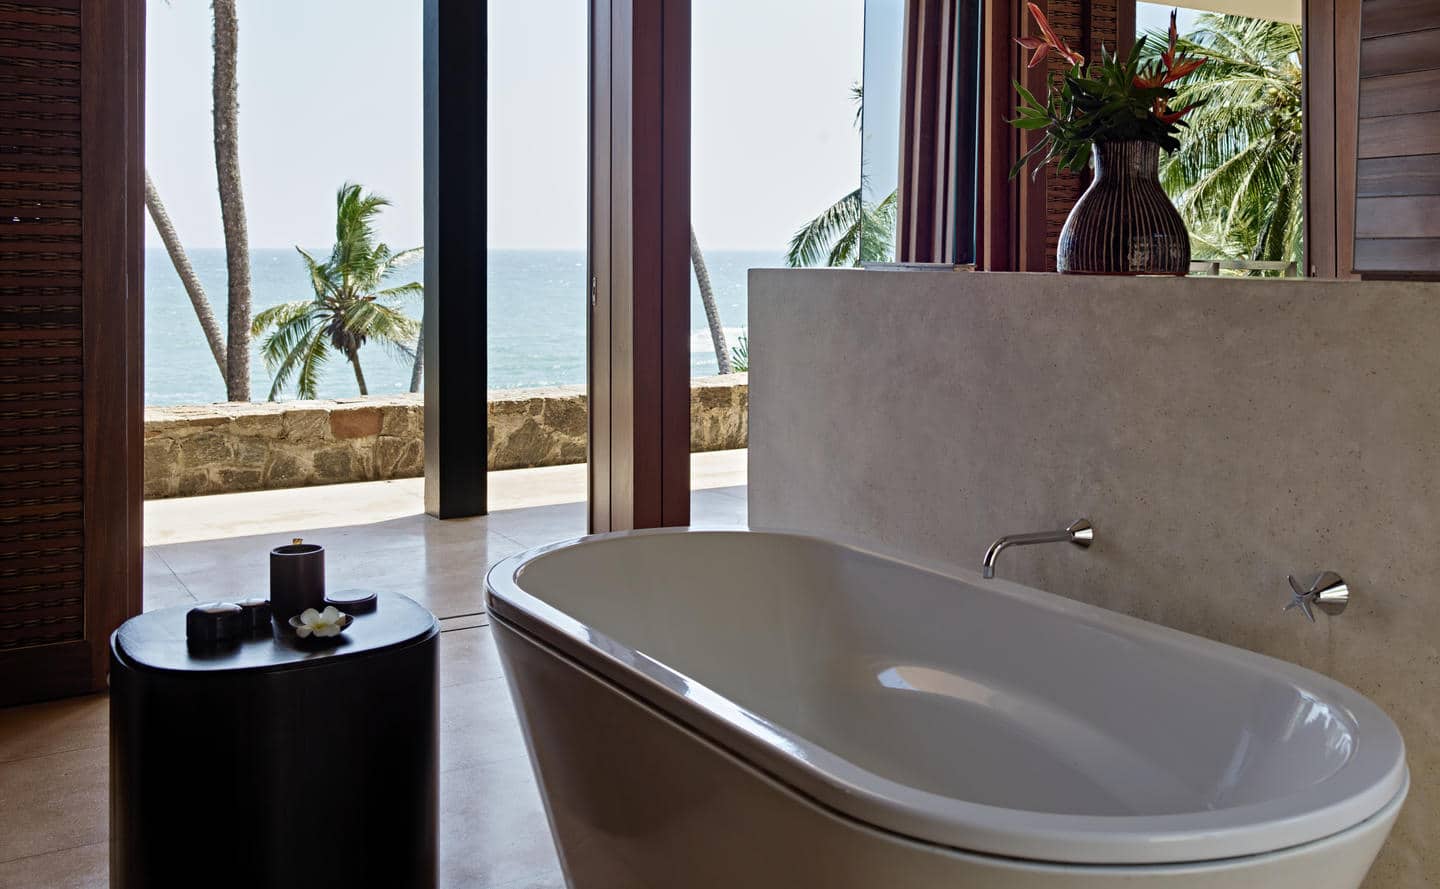 Amanwella, Sri Lanka suite, bathtub, ocean view